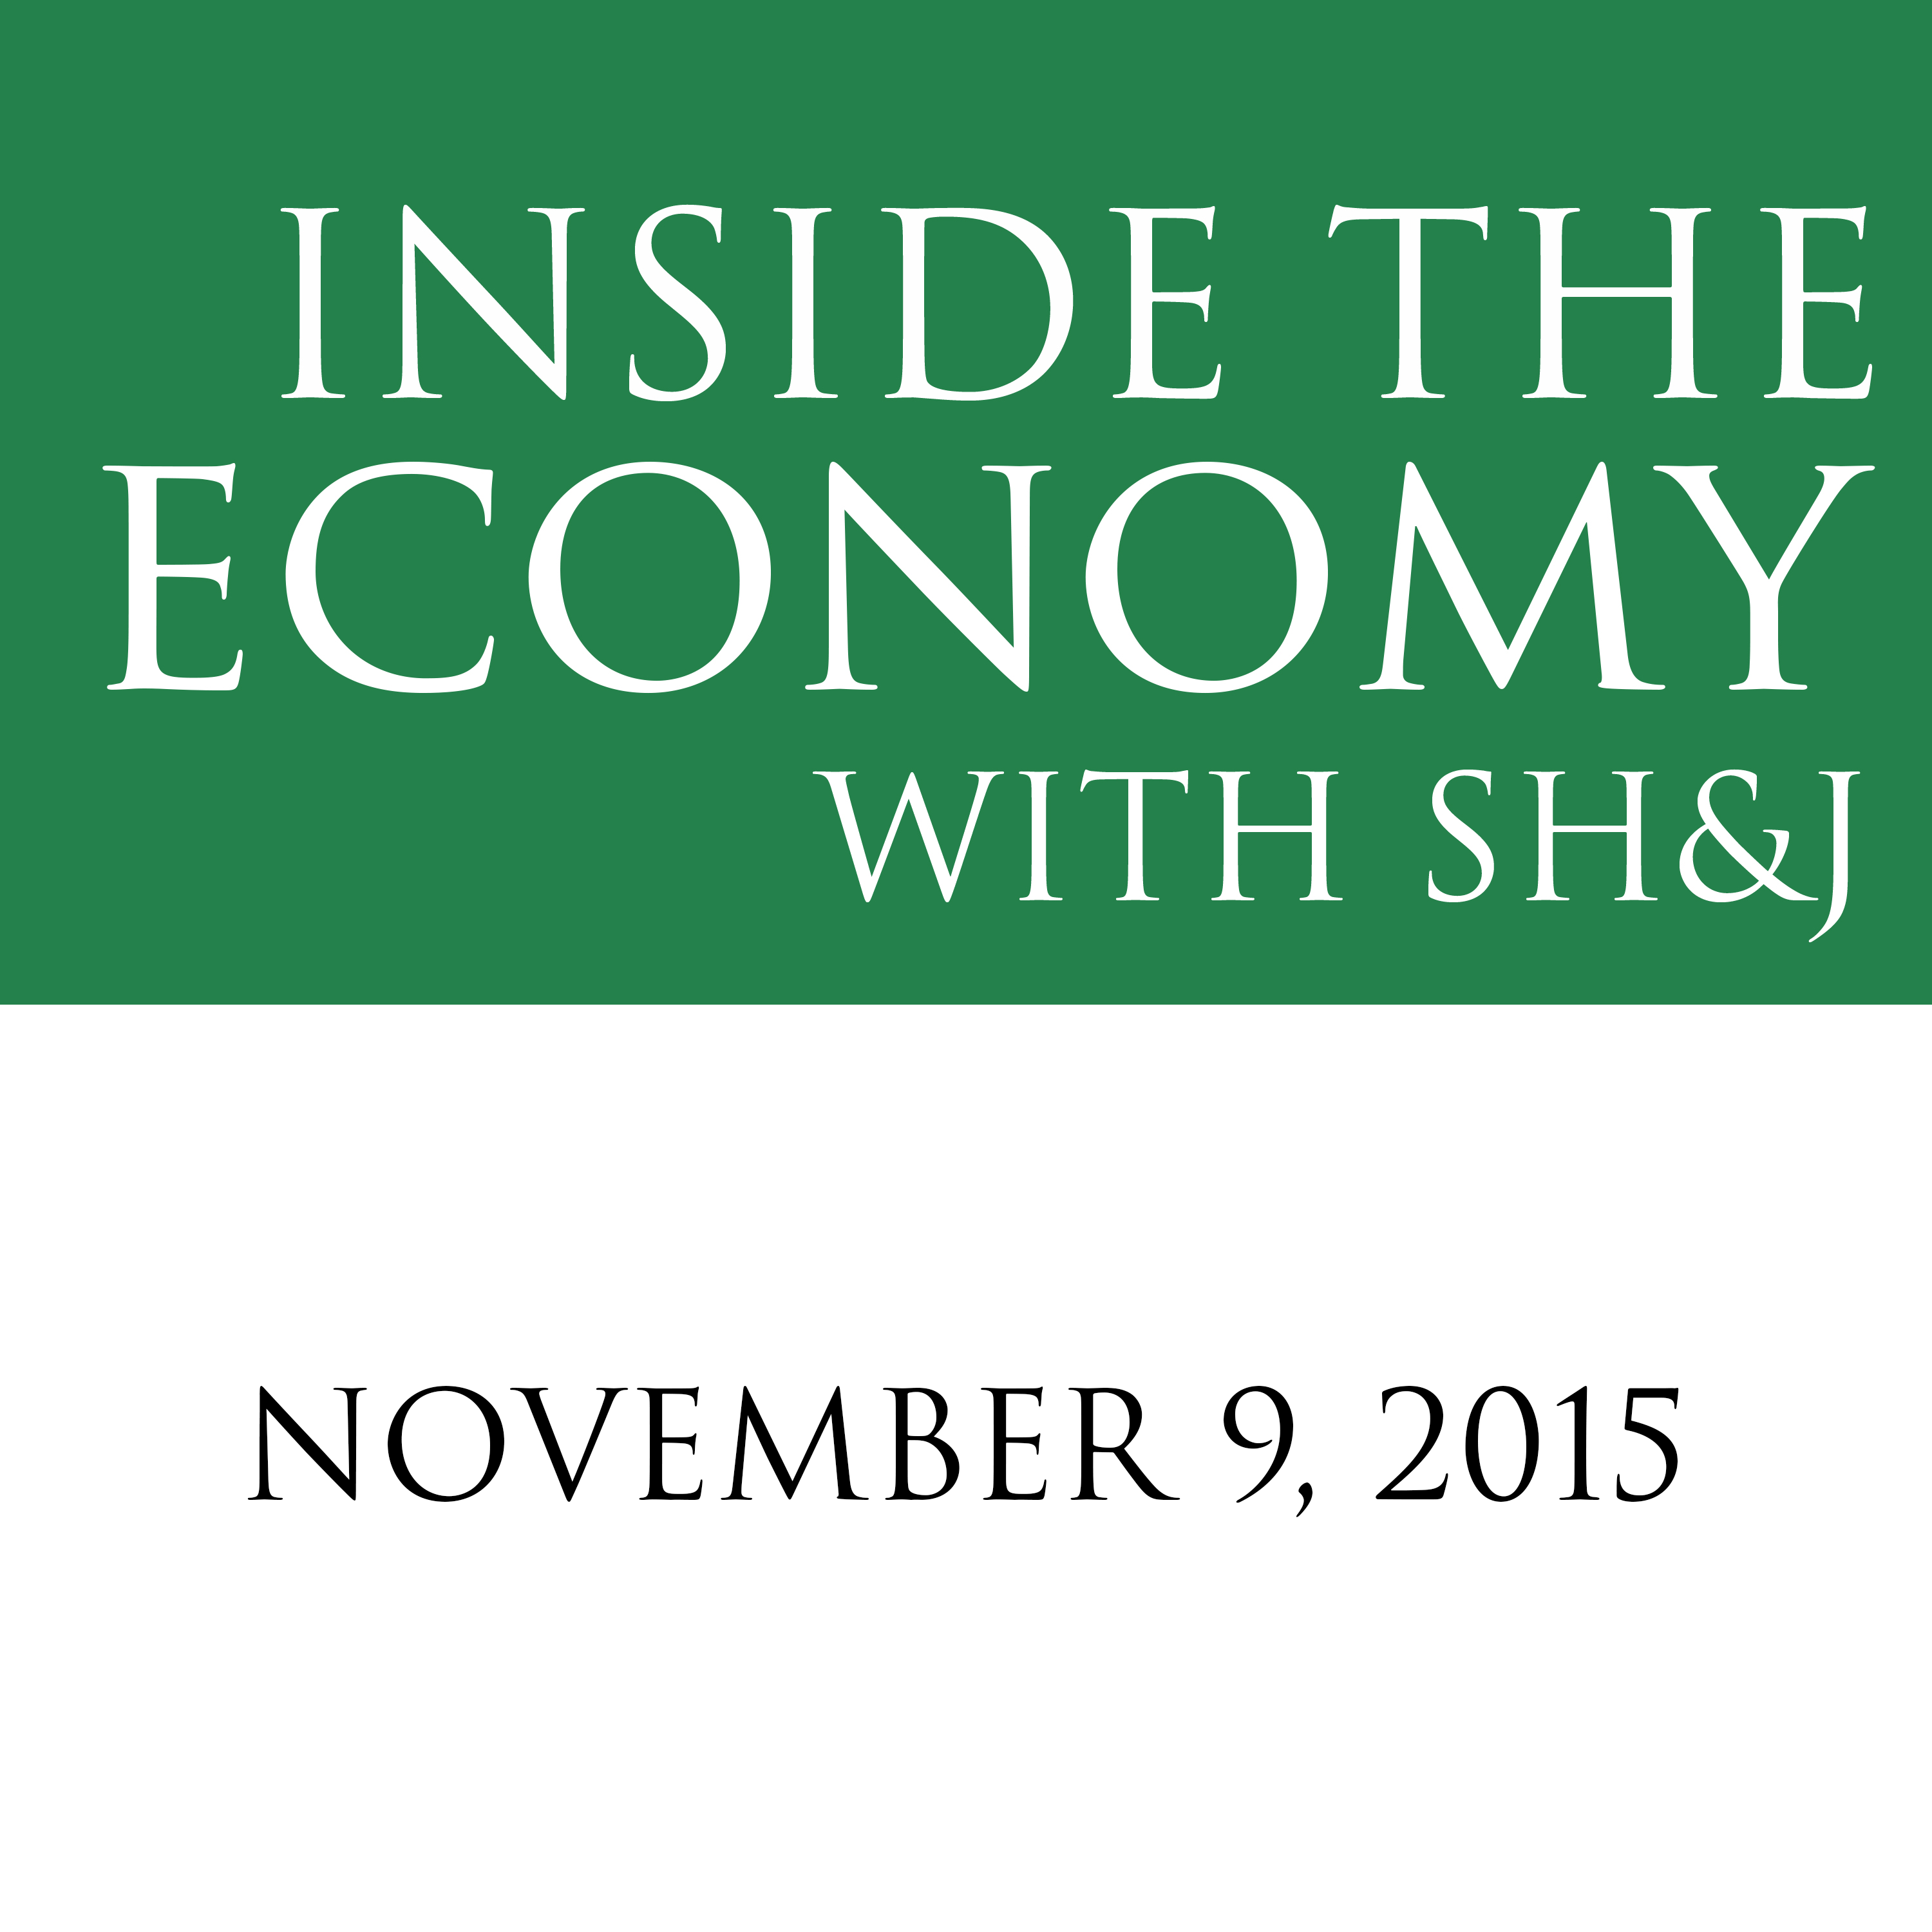 November 9, 2015 -- Inside the Economy With SH&J